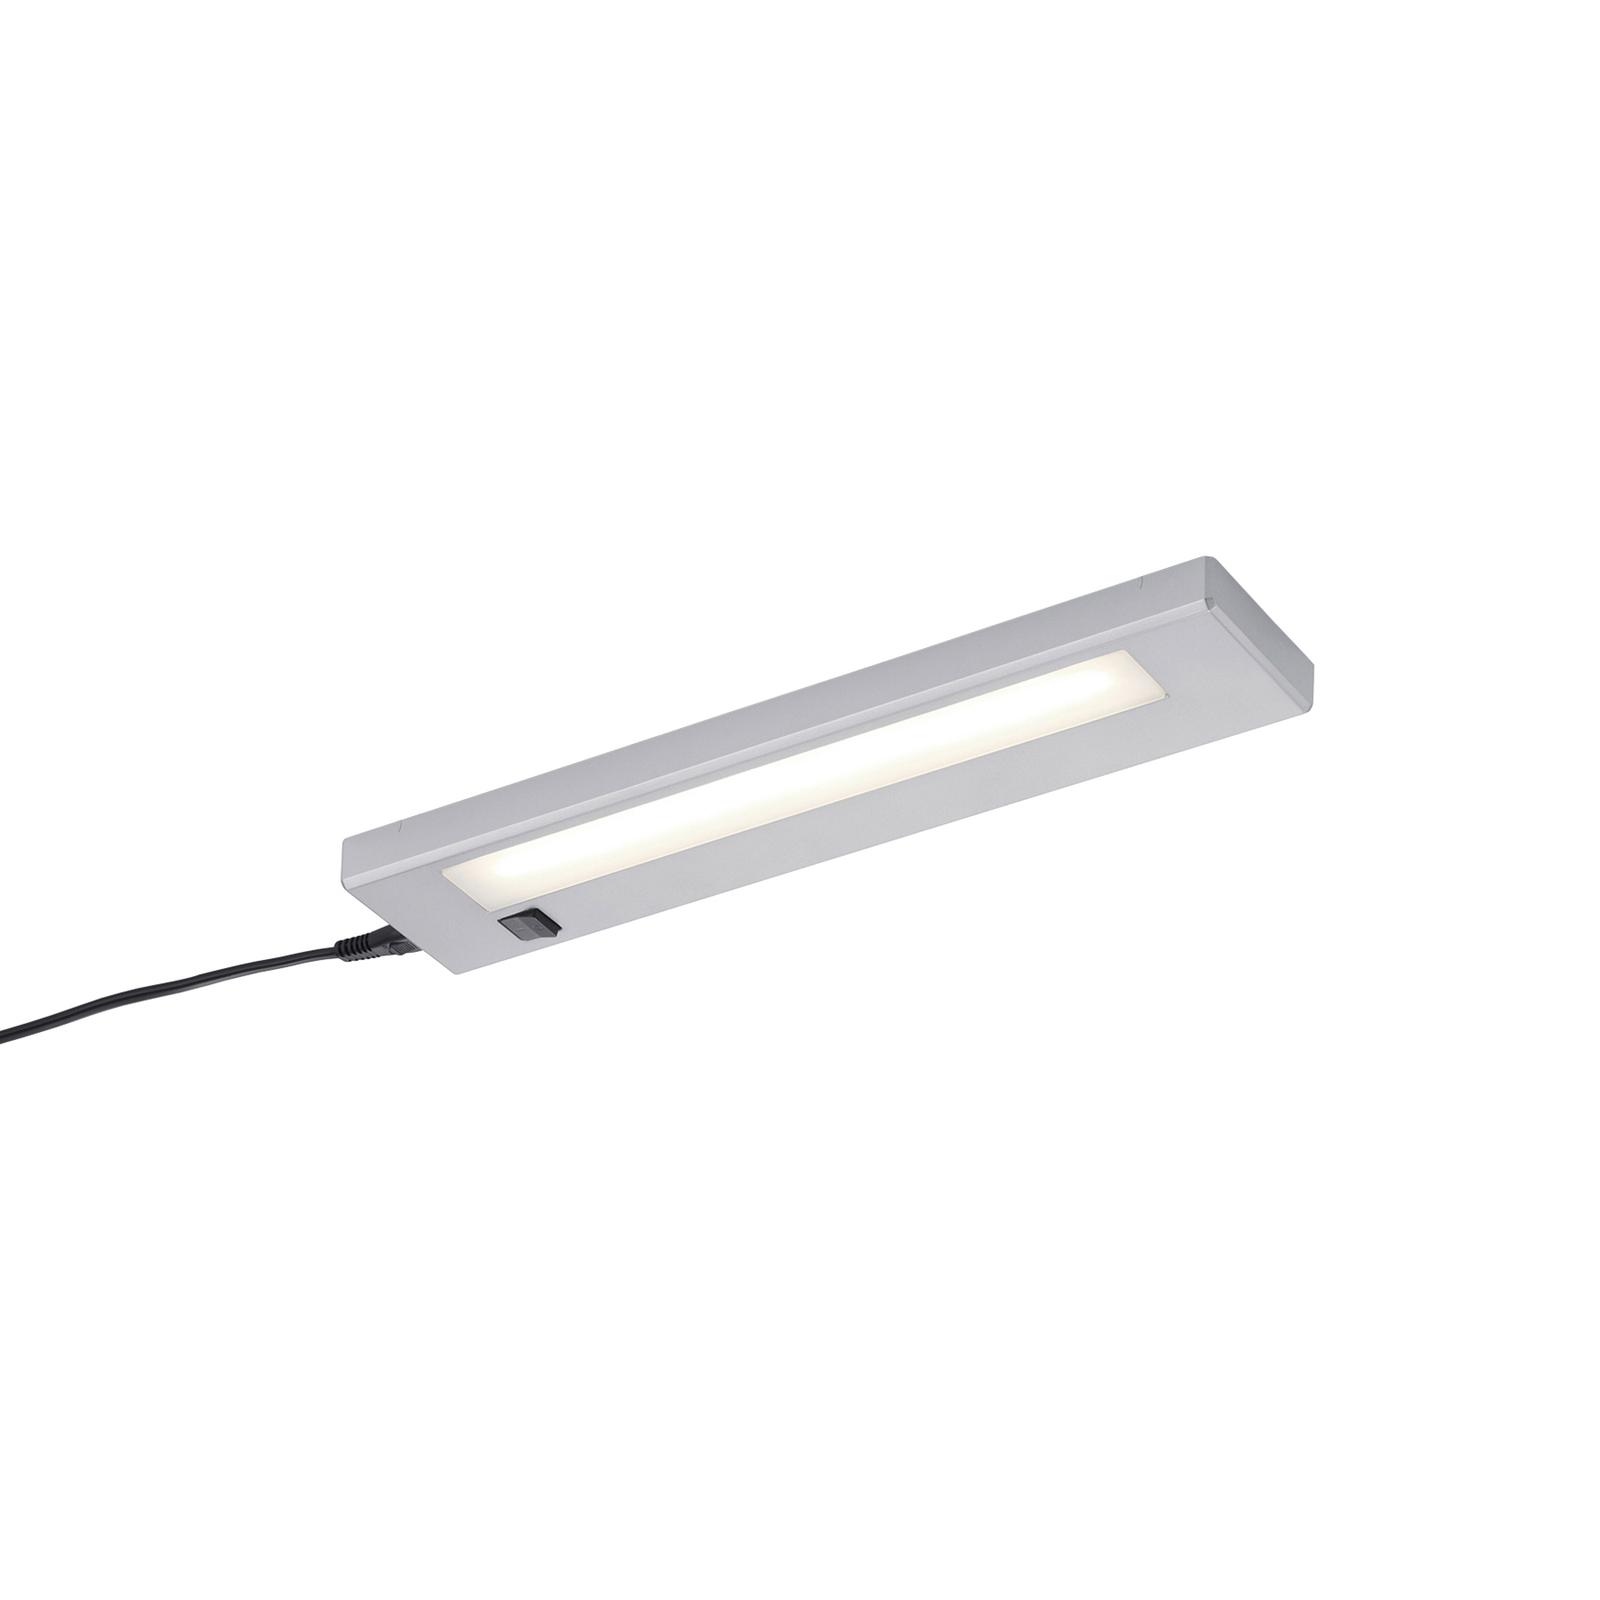 Lampe sous meuble LED Alino titane, longueur 34 cm